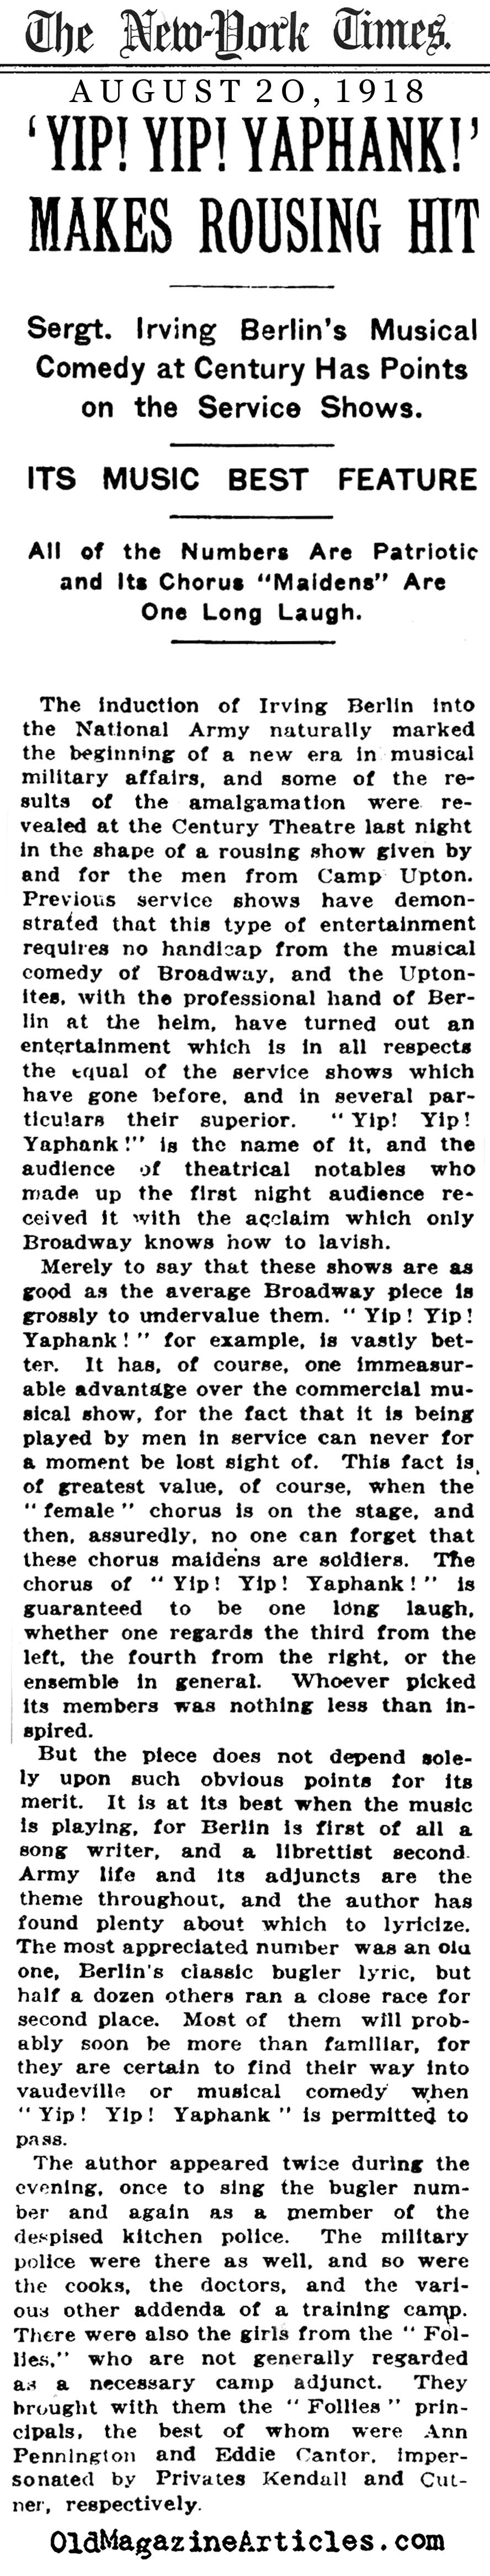 Yip! Yip! Yaphank! (NY Times, 1918)